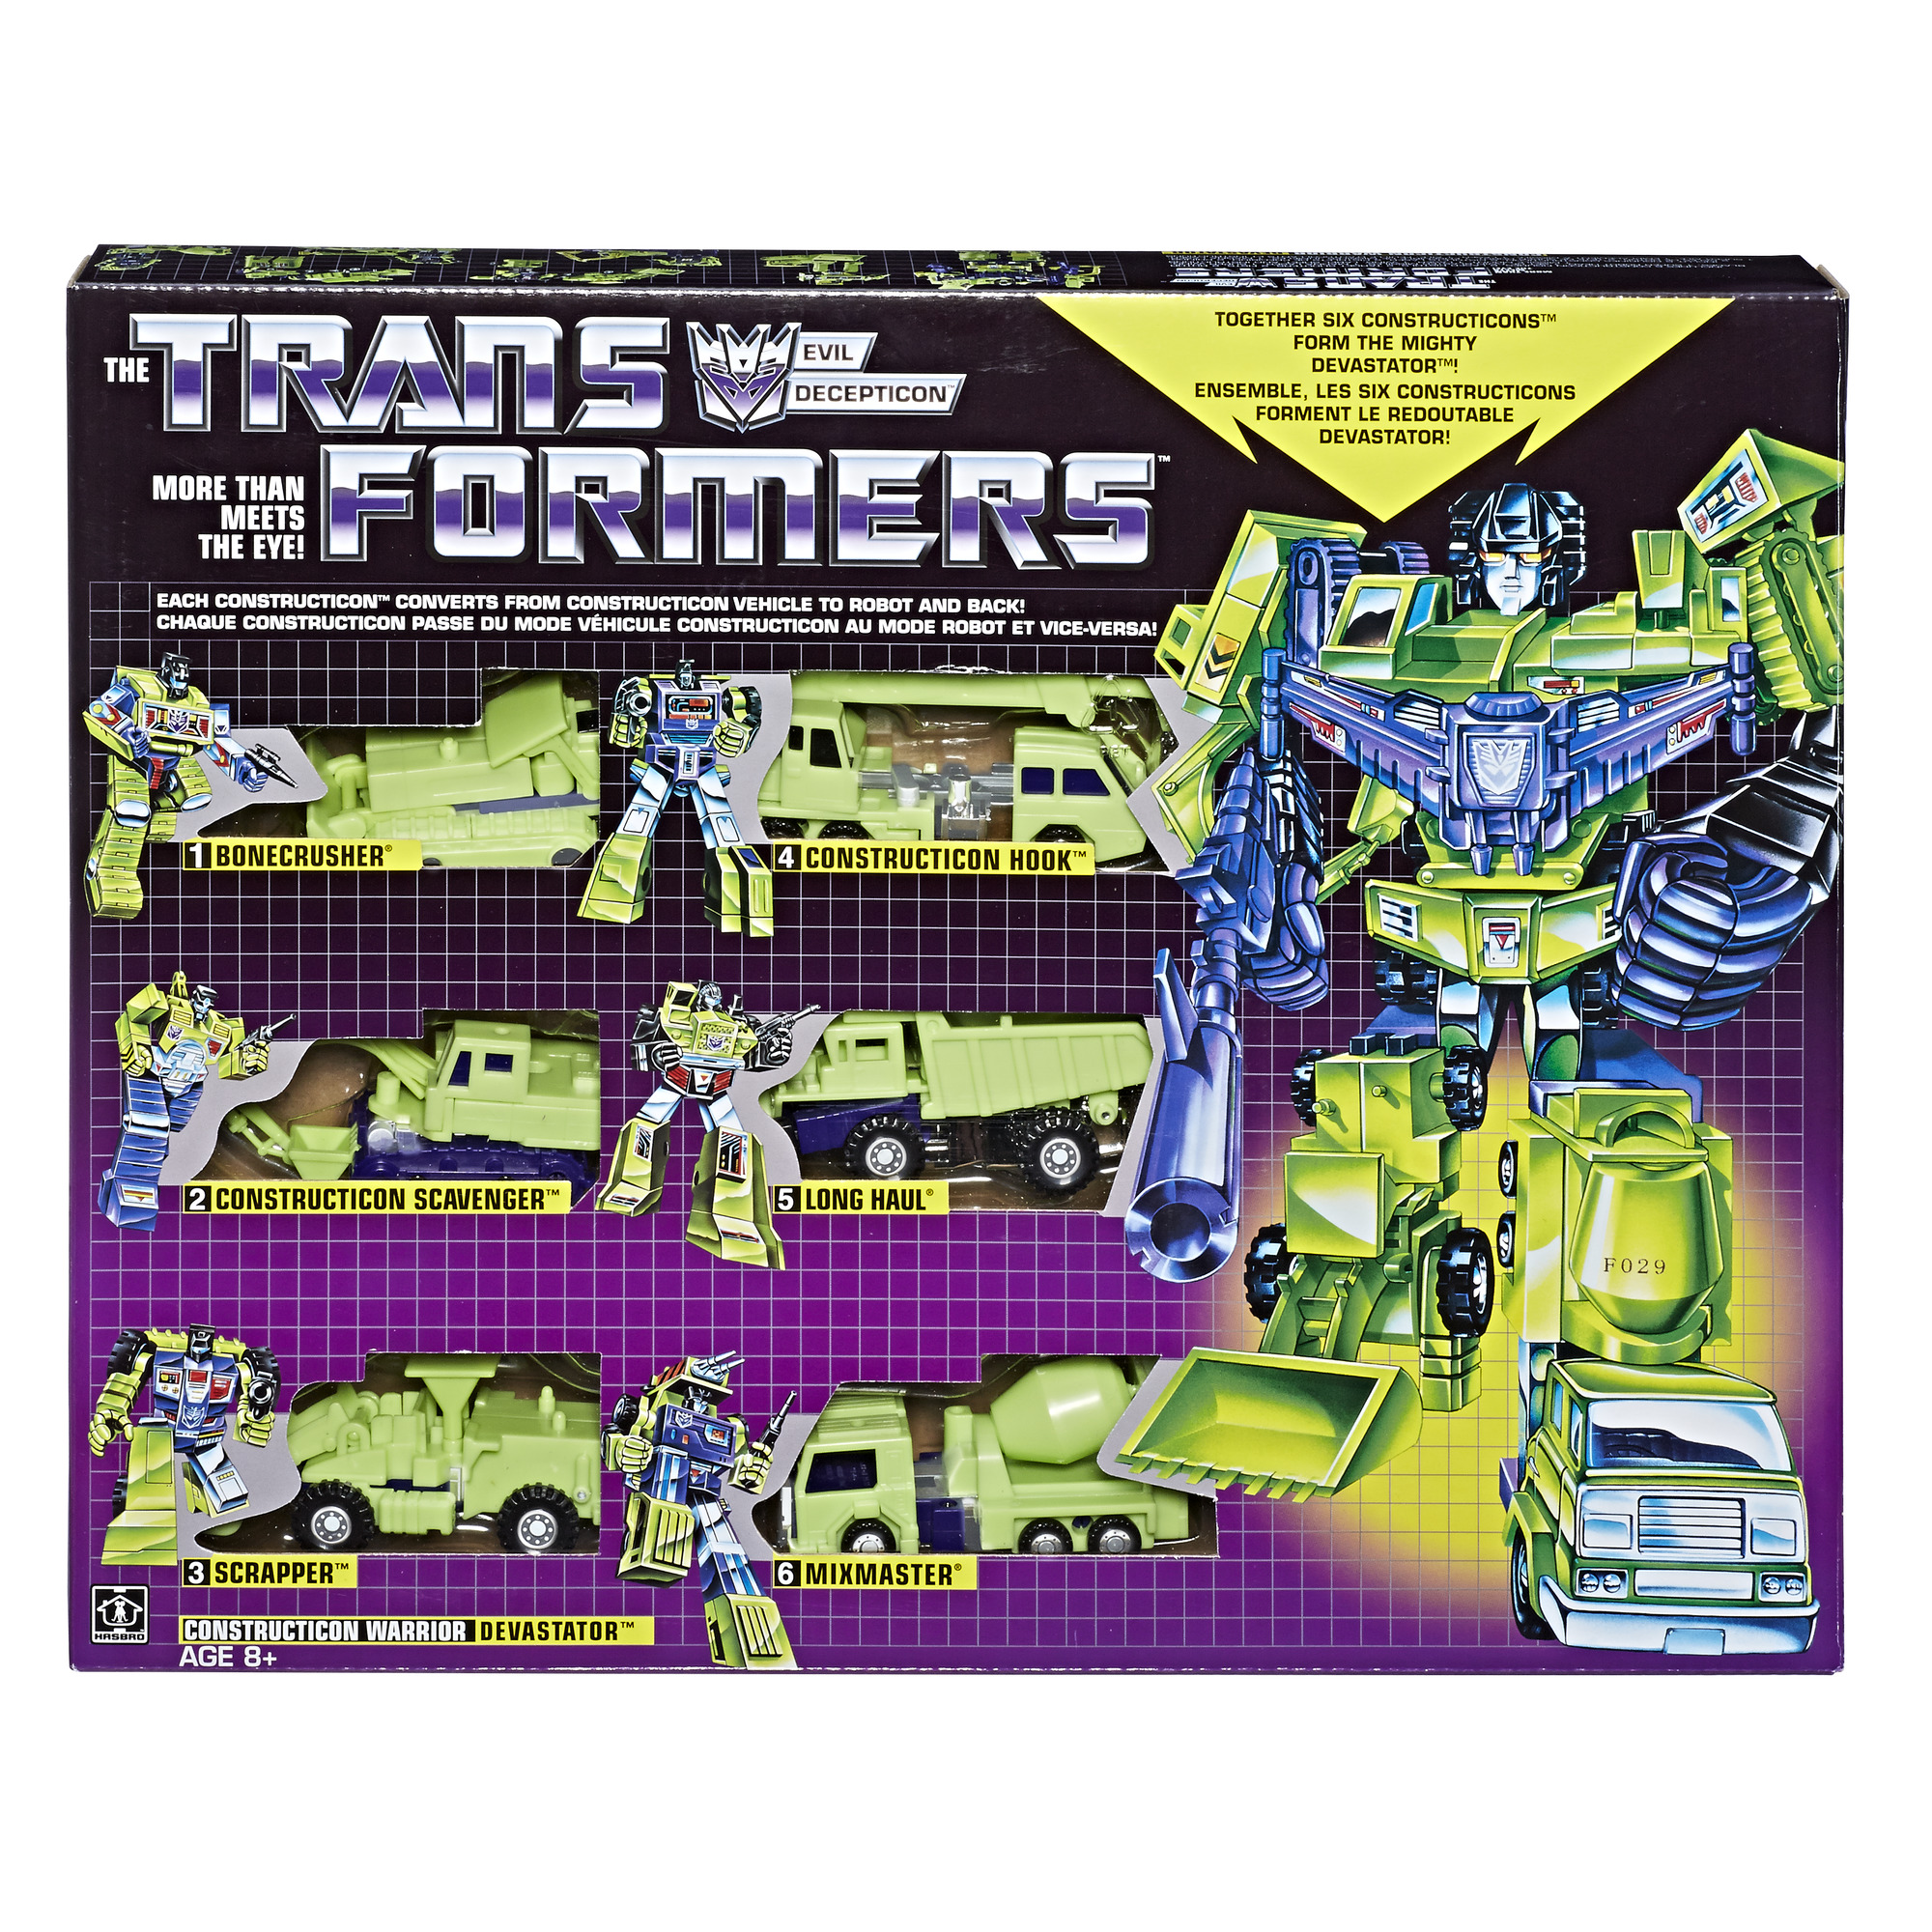 Transformers G1 Devastator reissue brand new Kids Toy Gift 10.24inches/26CM high